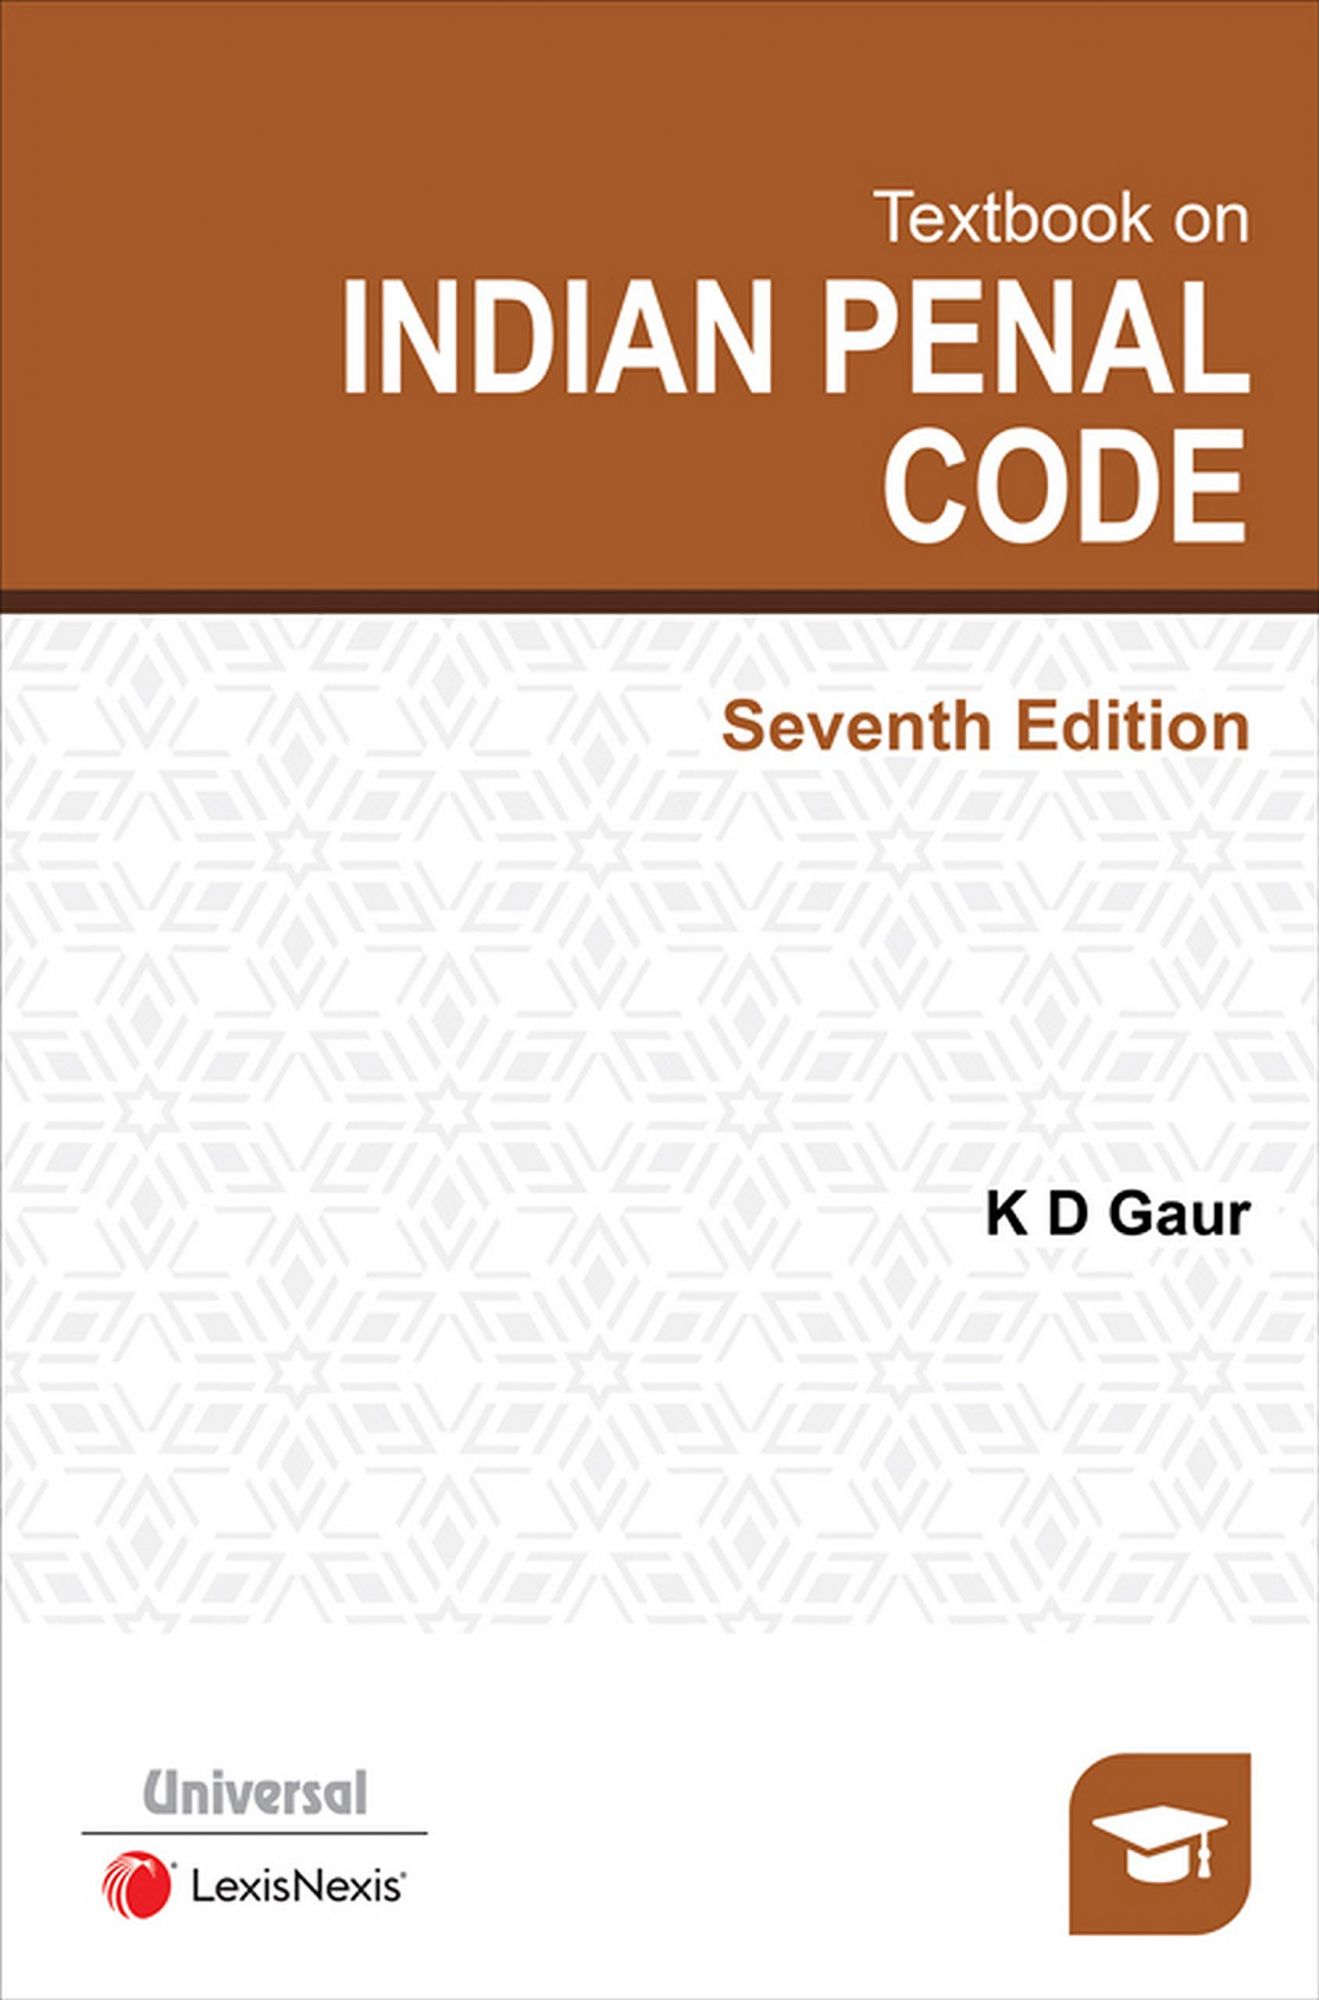 K D Gaur Textbook on Indian Penal Code 7th Edition by LexisNexis